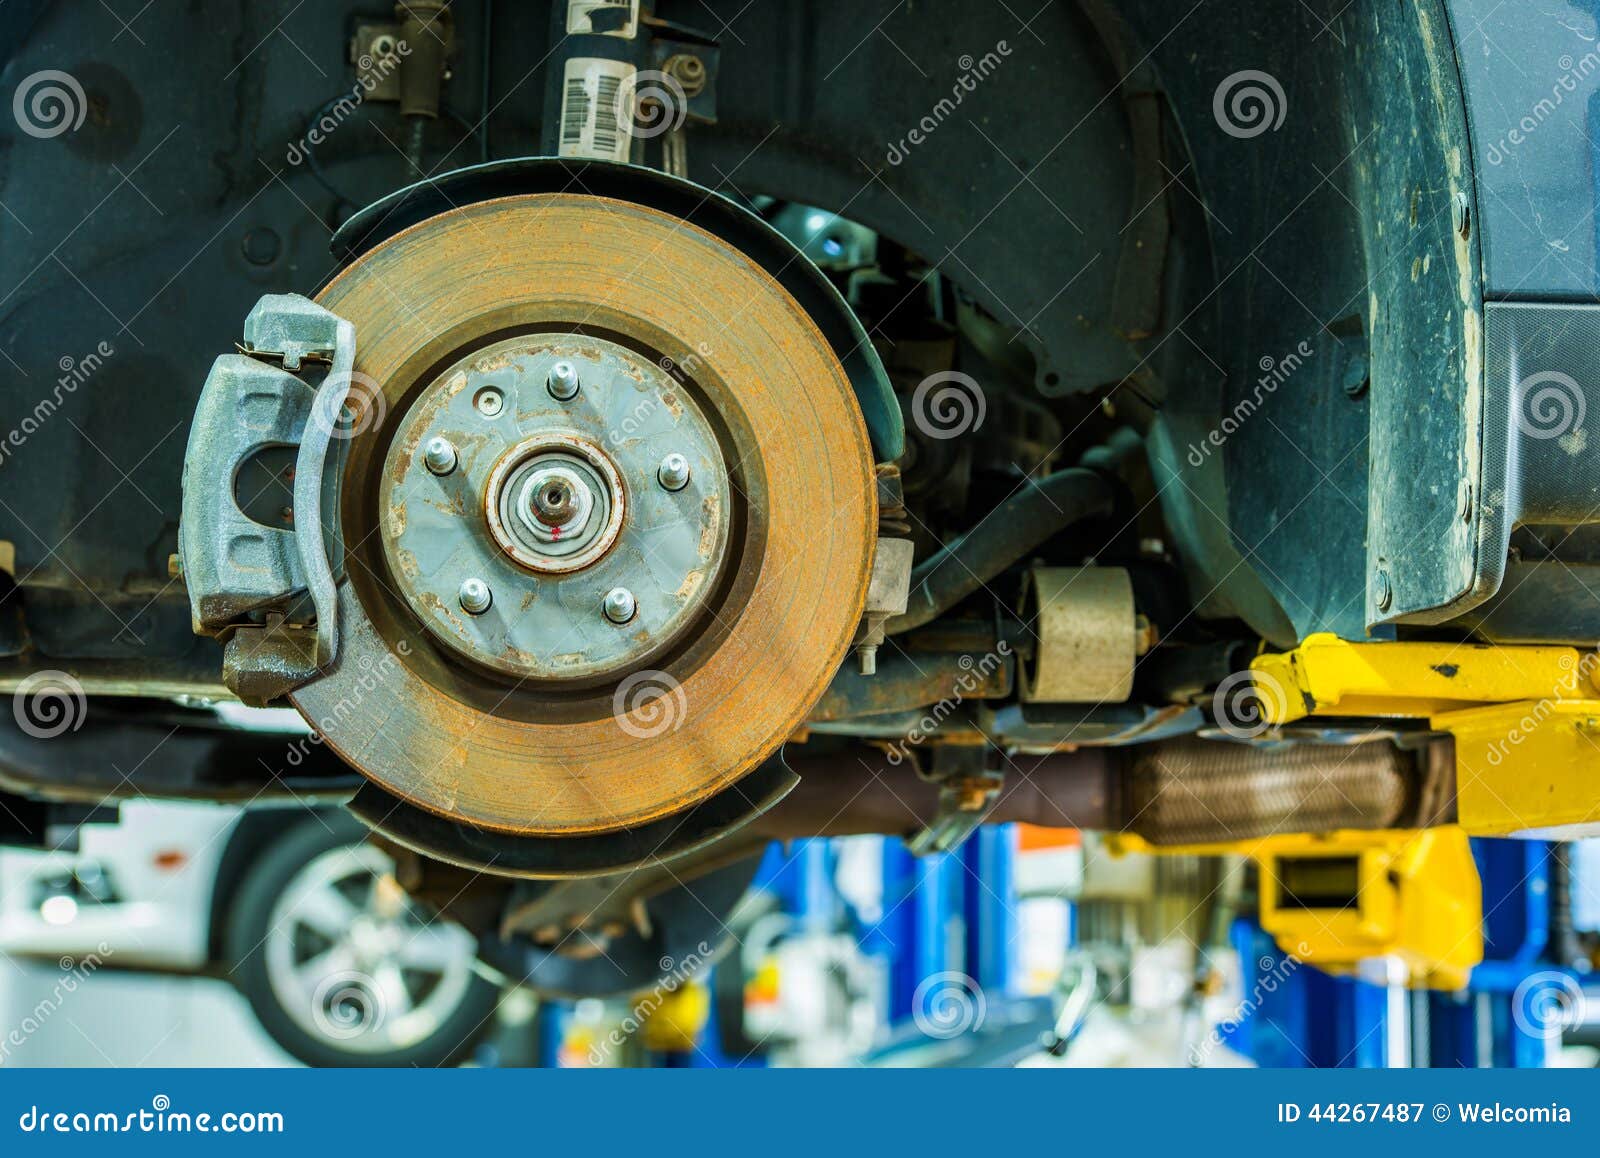 brakes-repair-auto-service-modern-car-servicing-car-maintenance ...